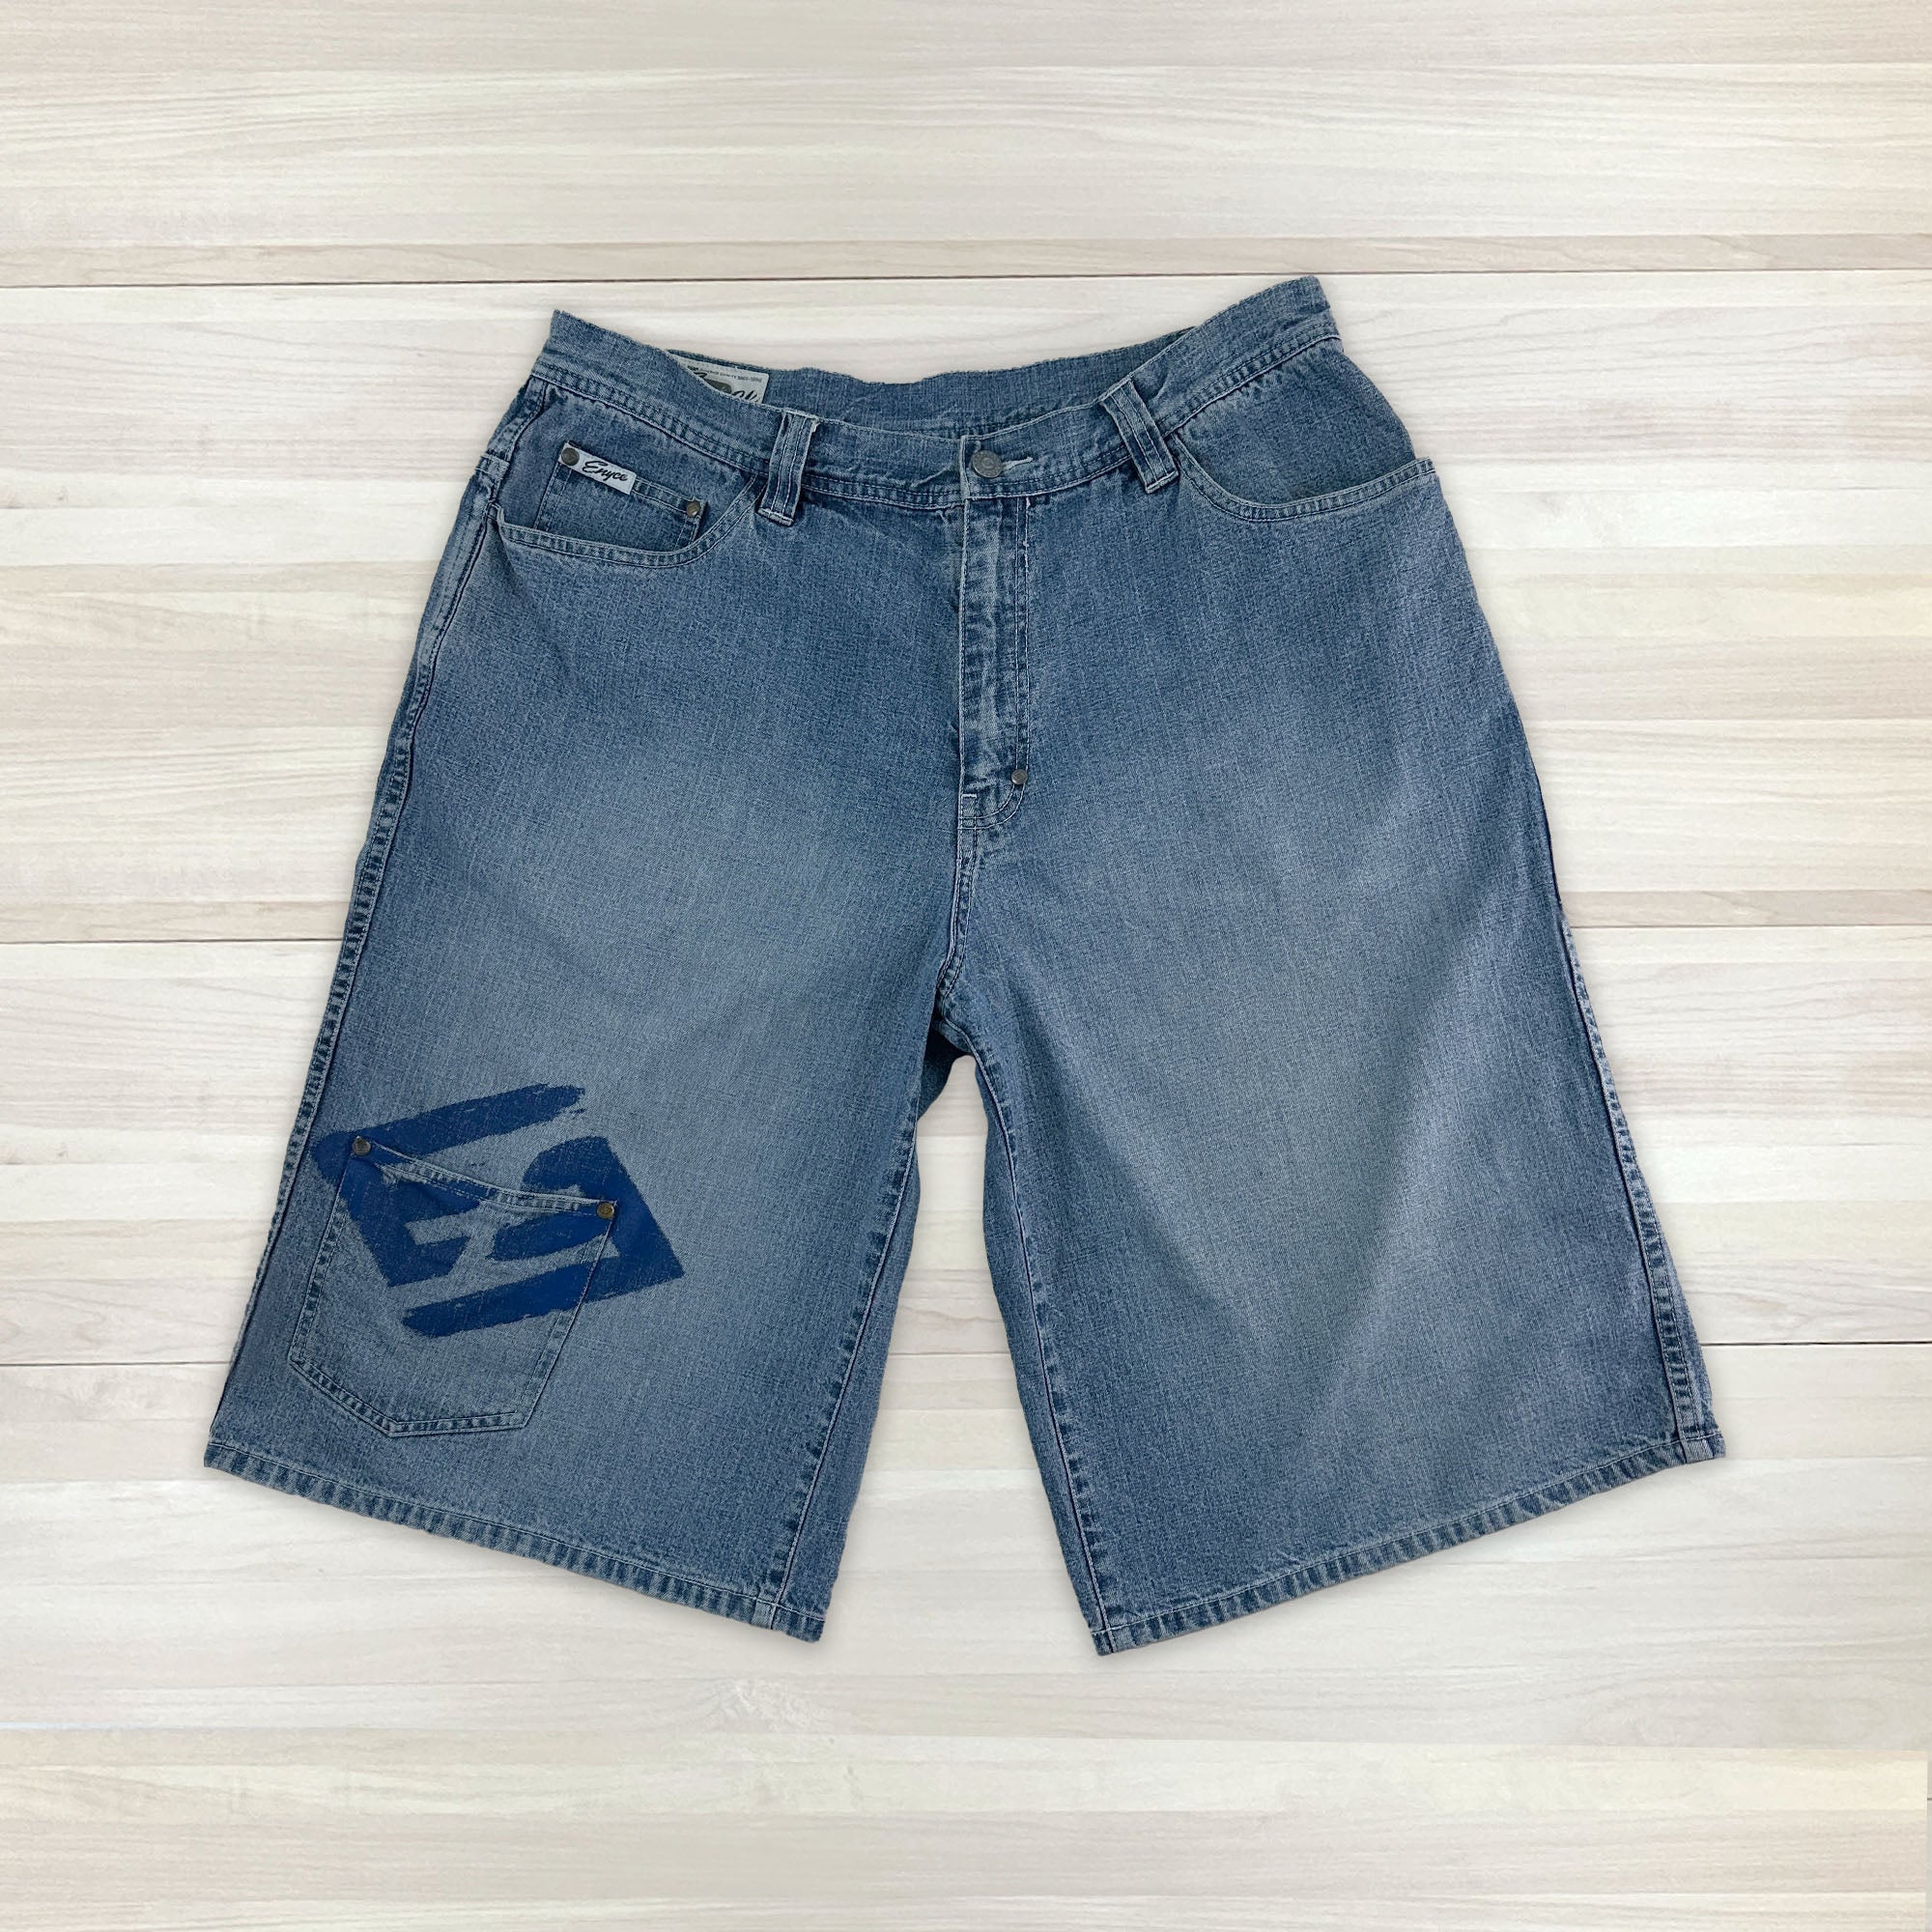 Vintage Enyce Baggy Denim Shorts - Measures 36x14